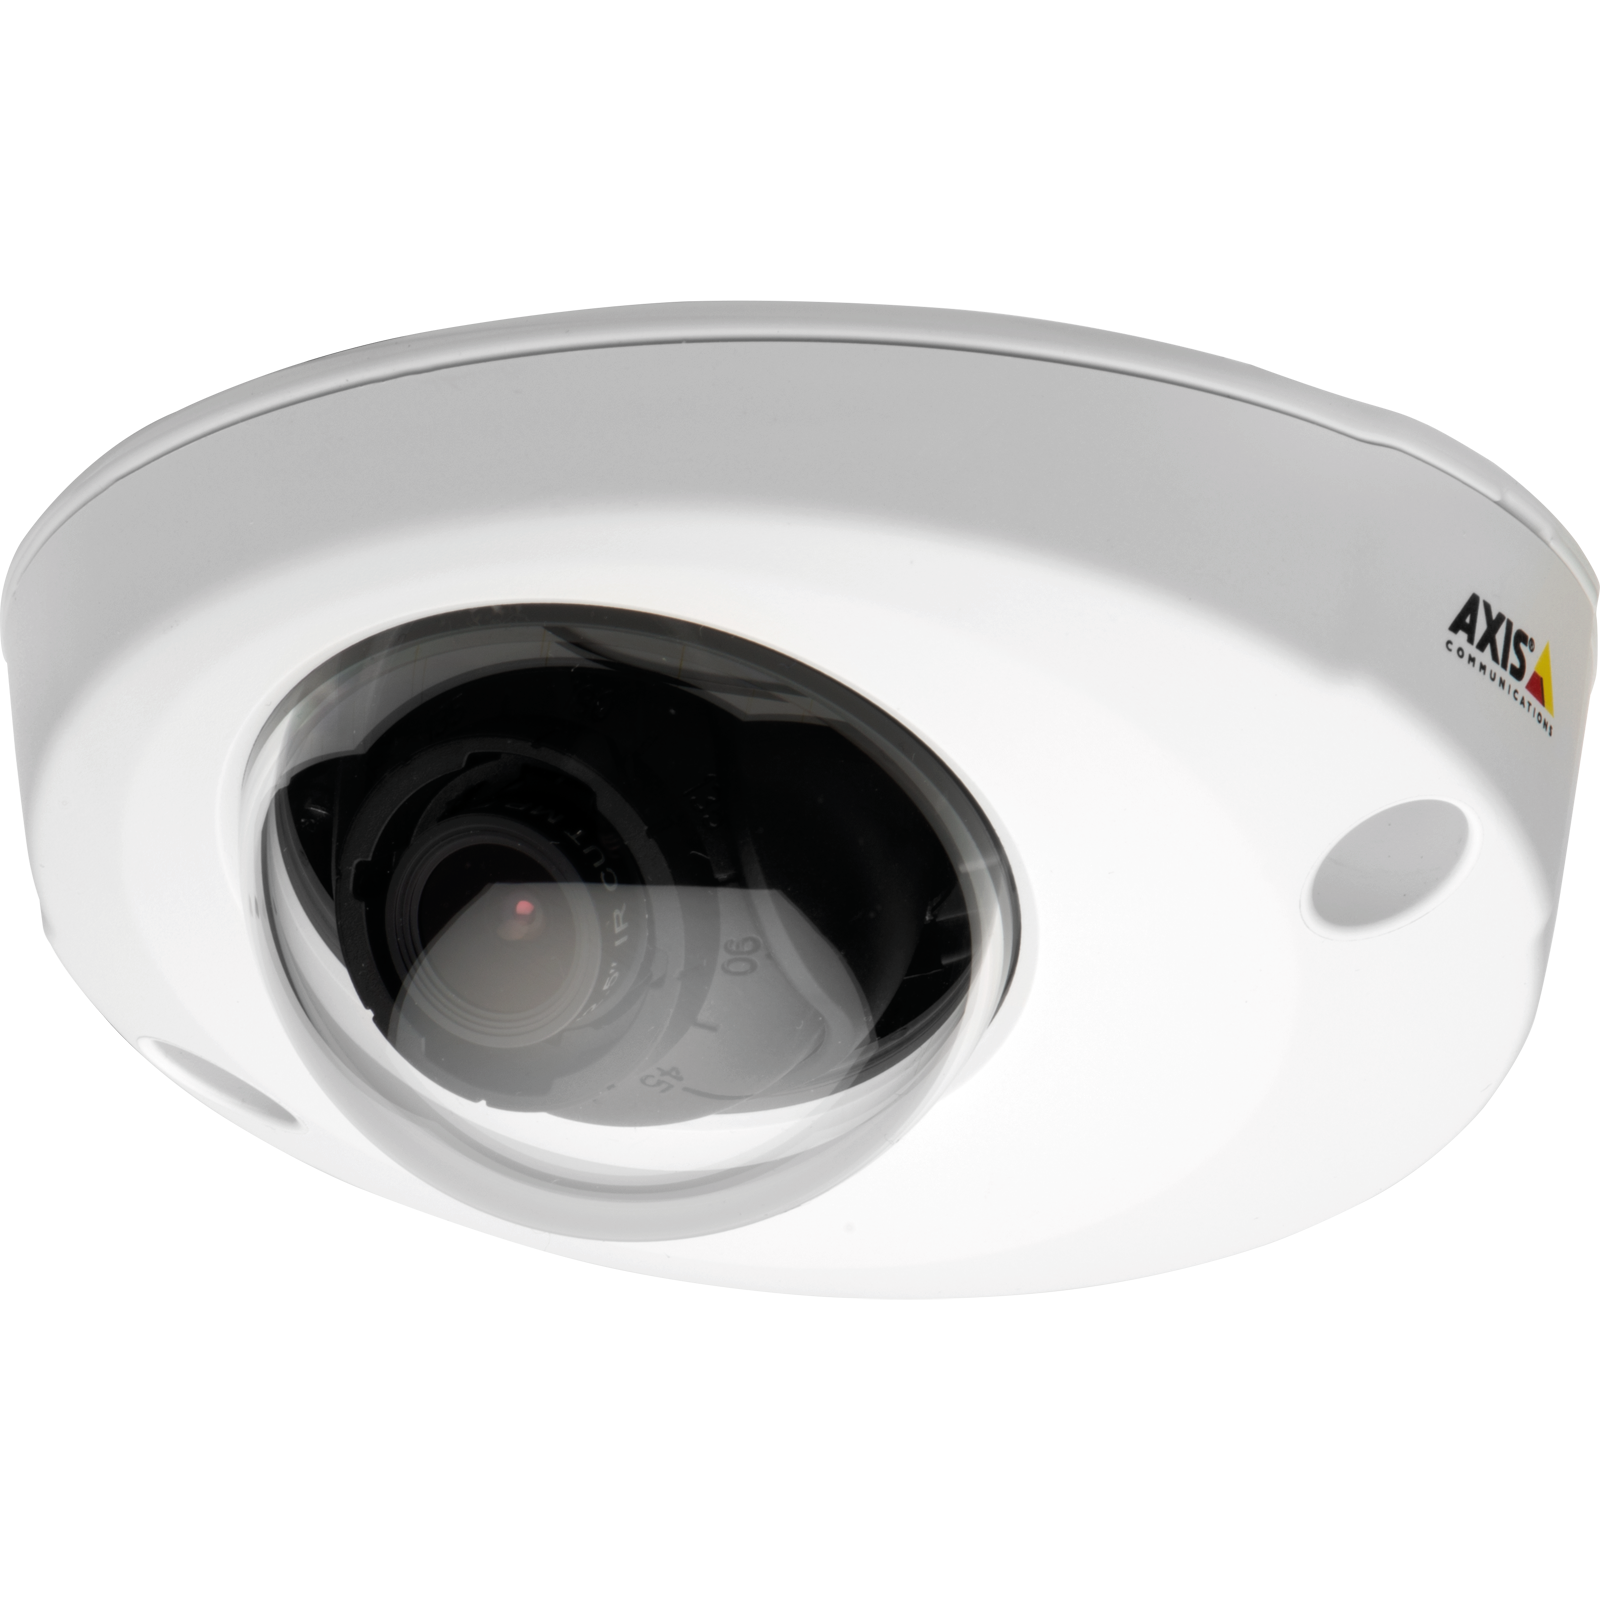 AXIS P3904-R HDTV Network Camera Fixed Dome Security Surveilla Netzwerk 